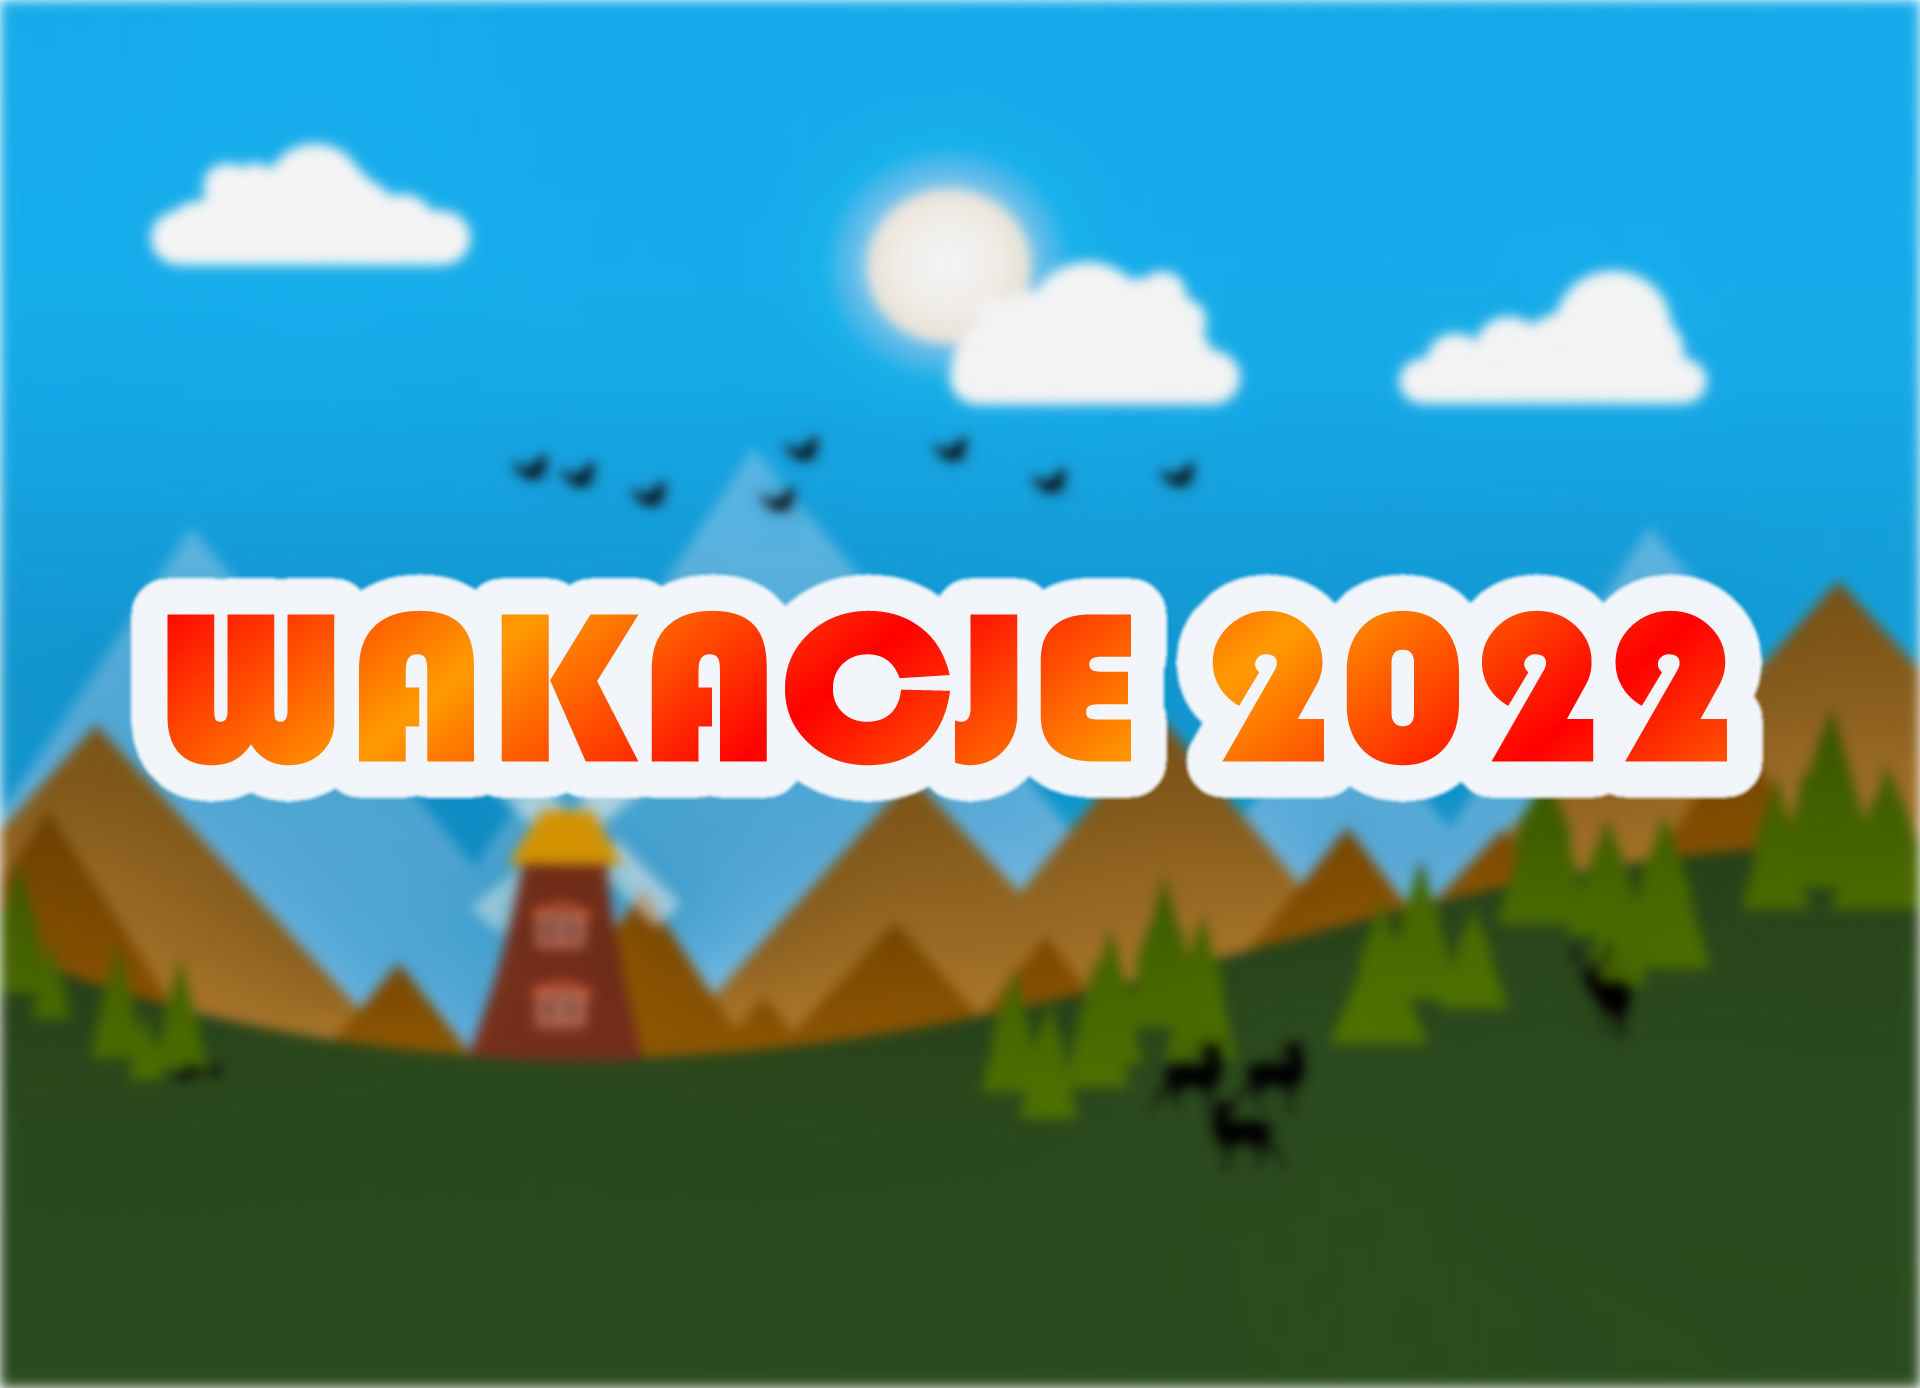 WAKACJE 2022